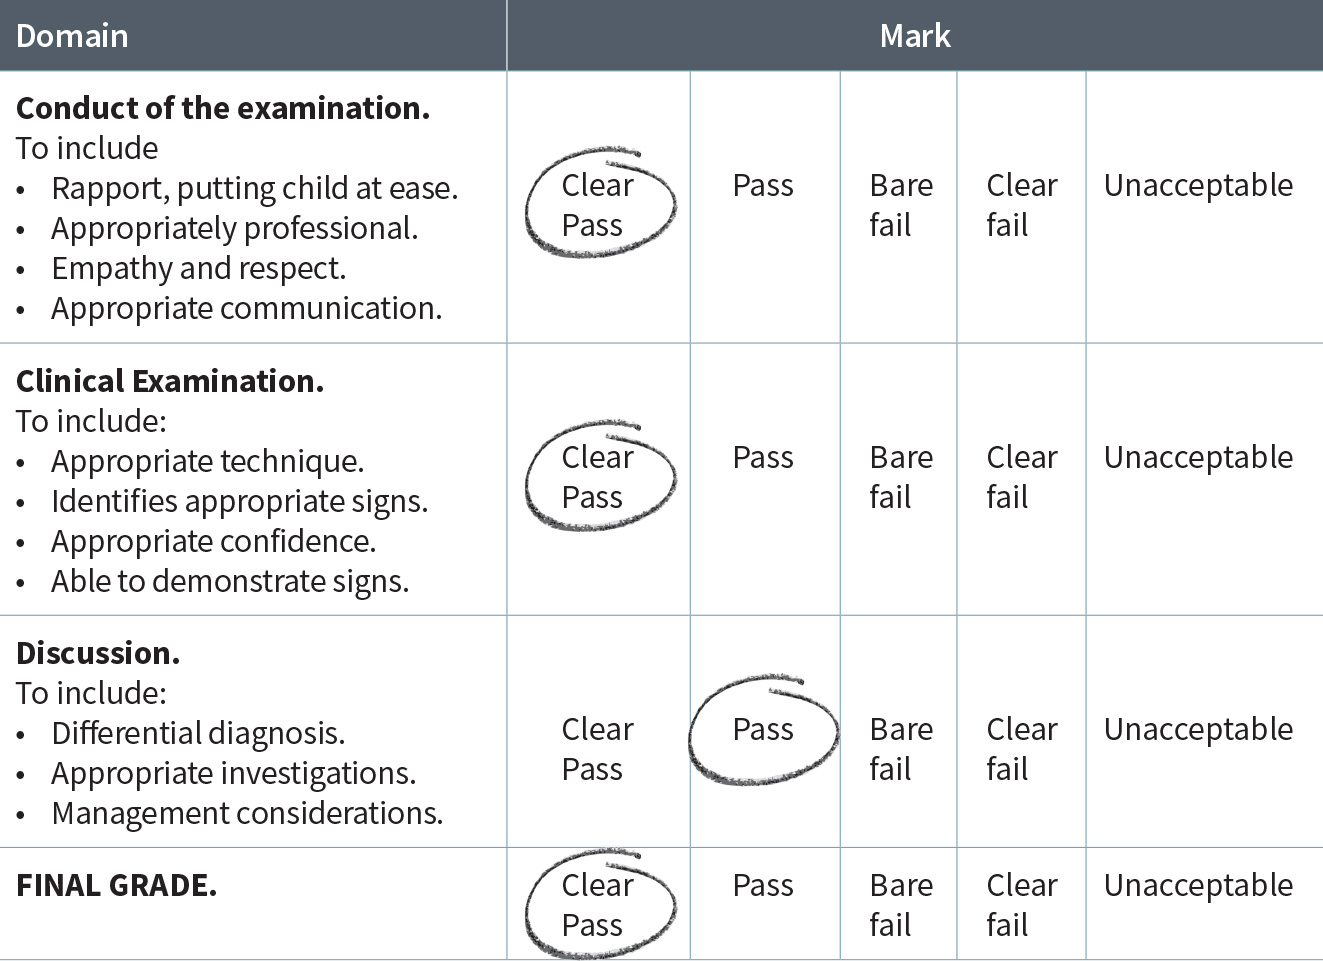 Examination Mark Scheme table